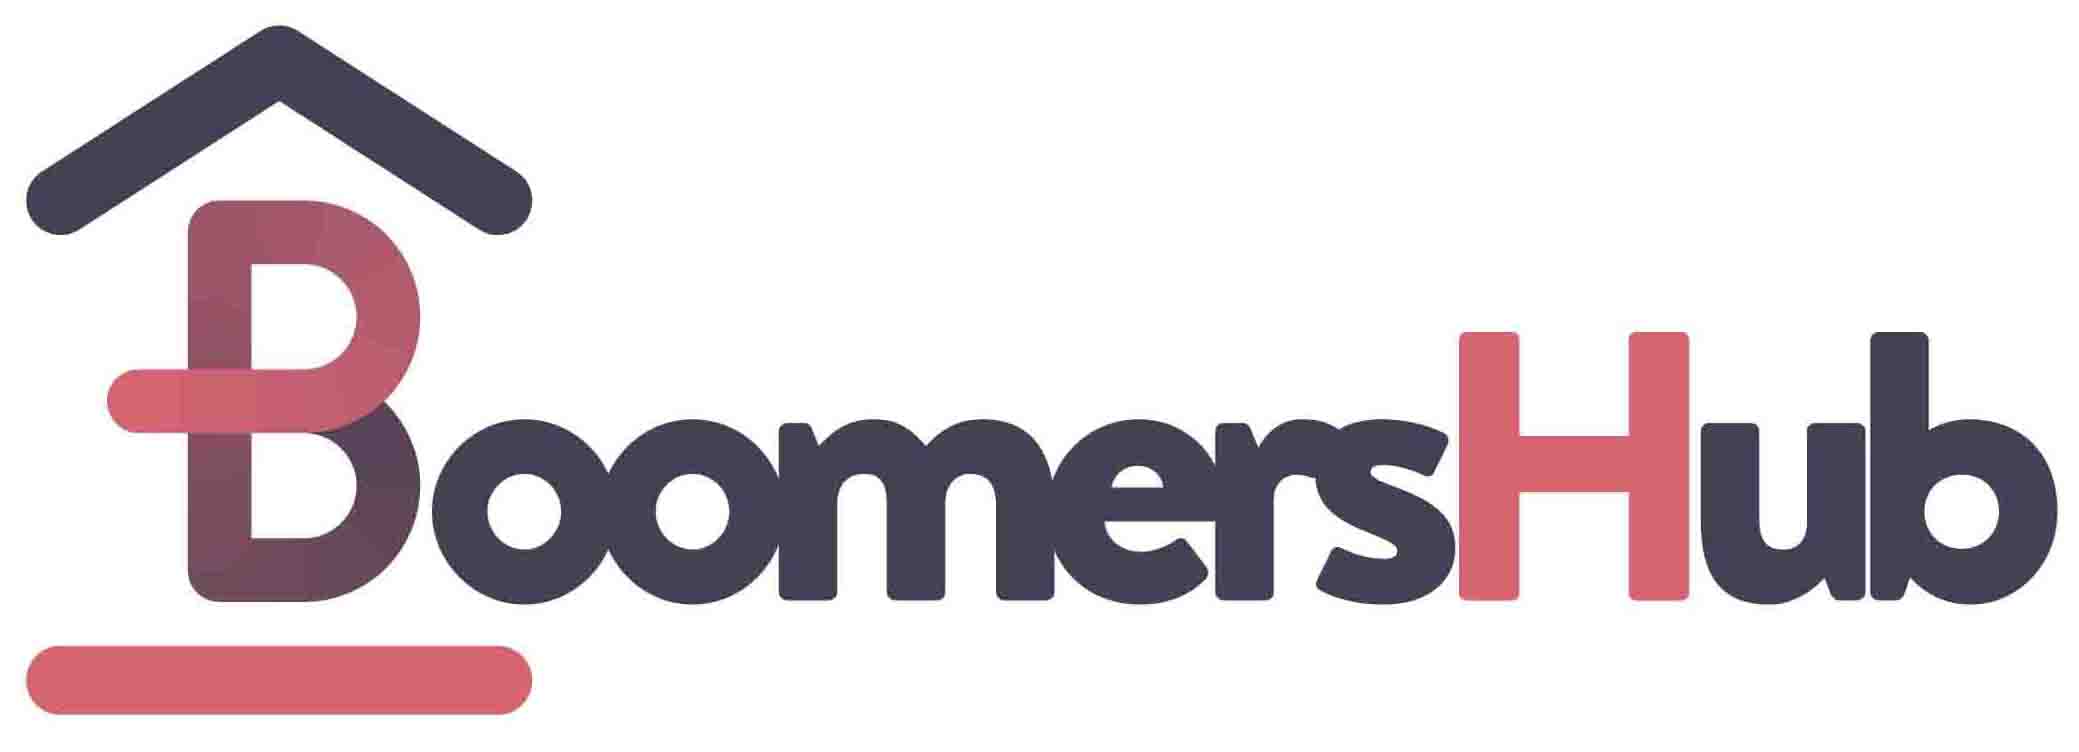 Boomershub logo